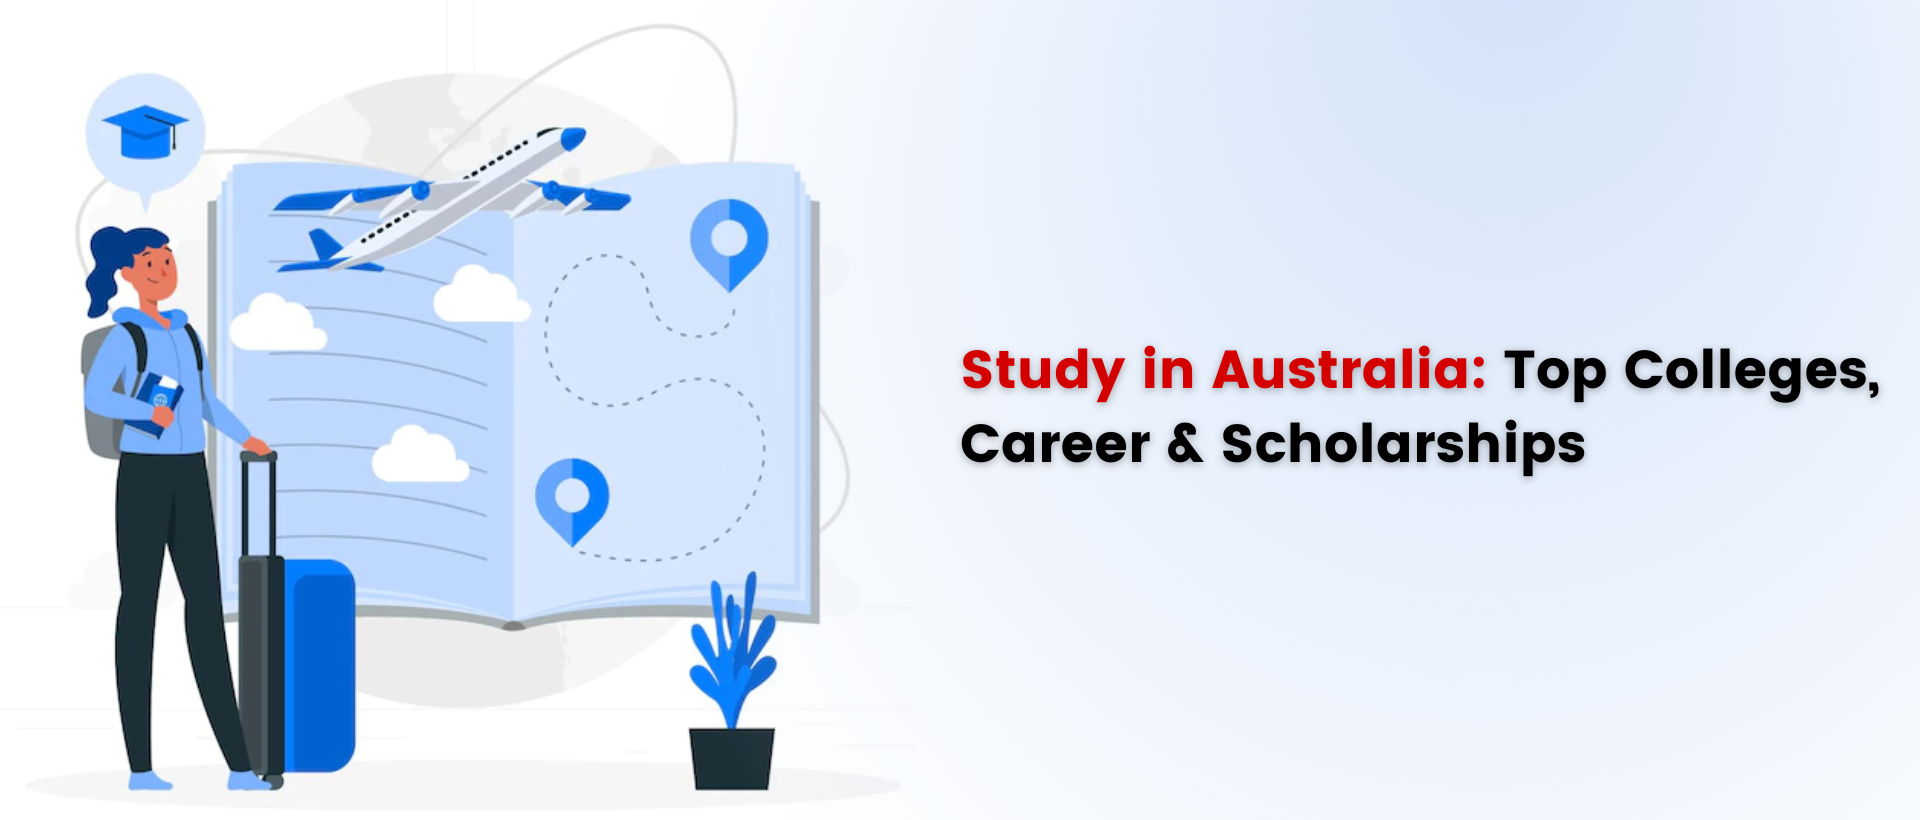 Study in Australia: Top Colleges, Career & Scholarships